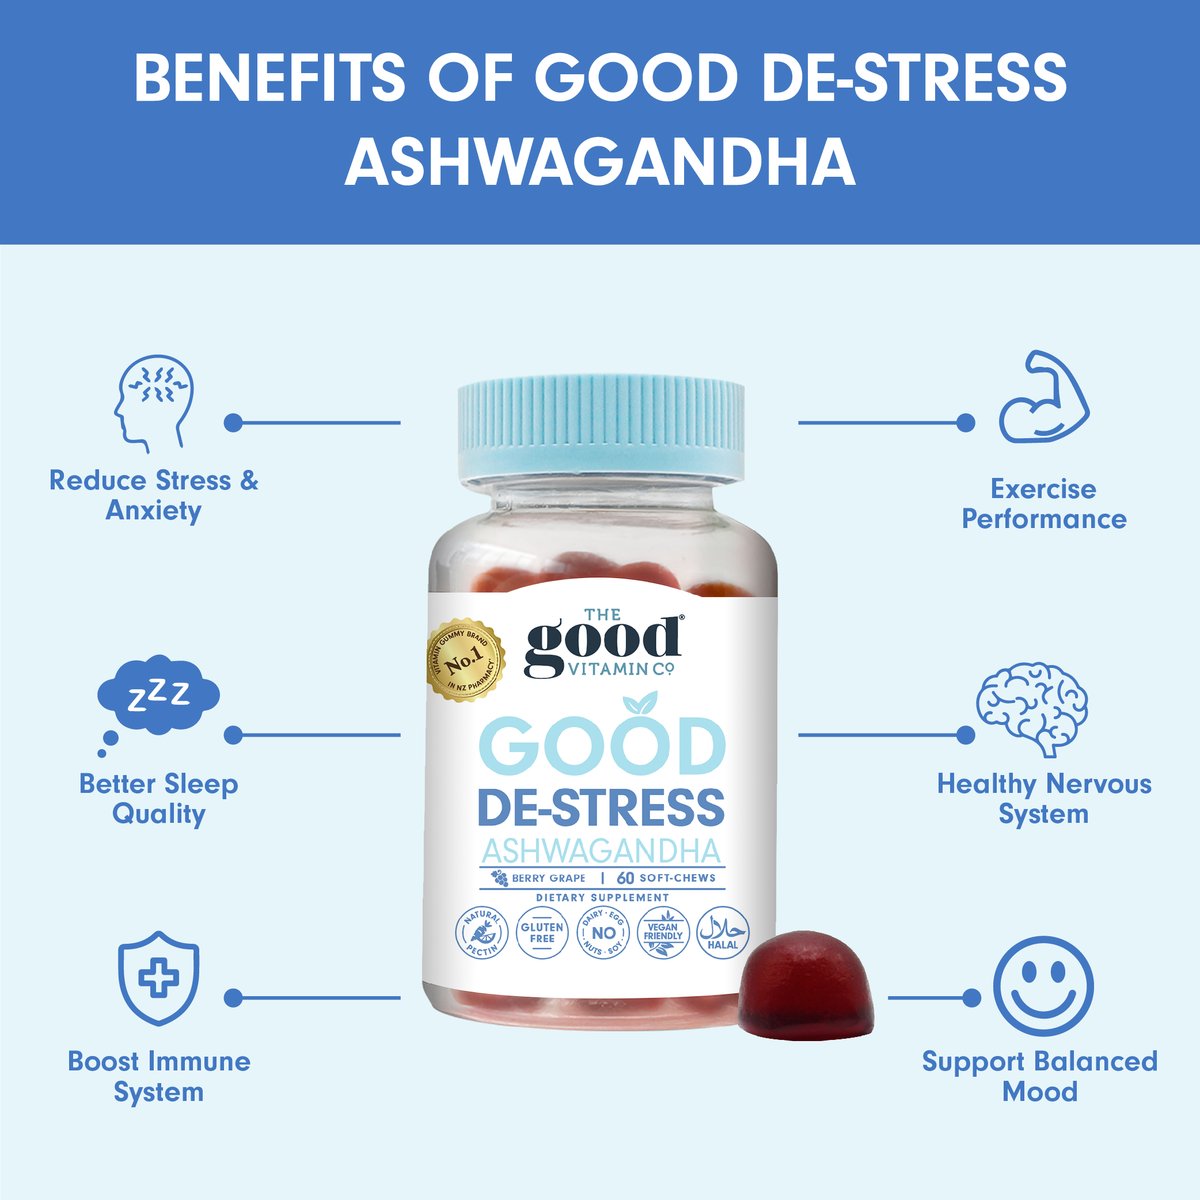 Good De-Stress Ashwagandha Benefits